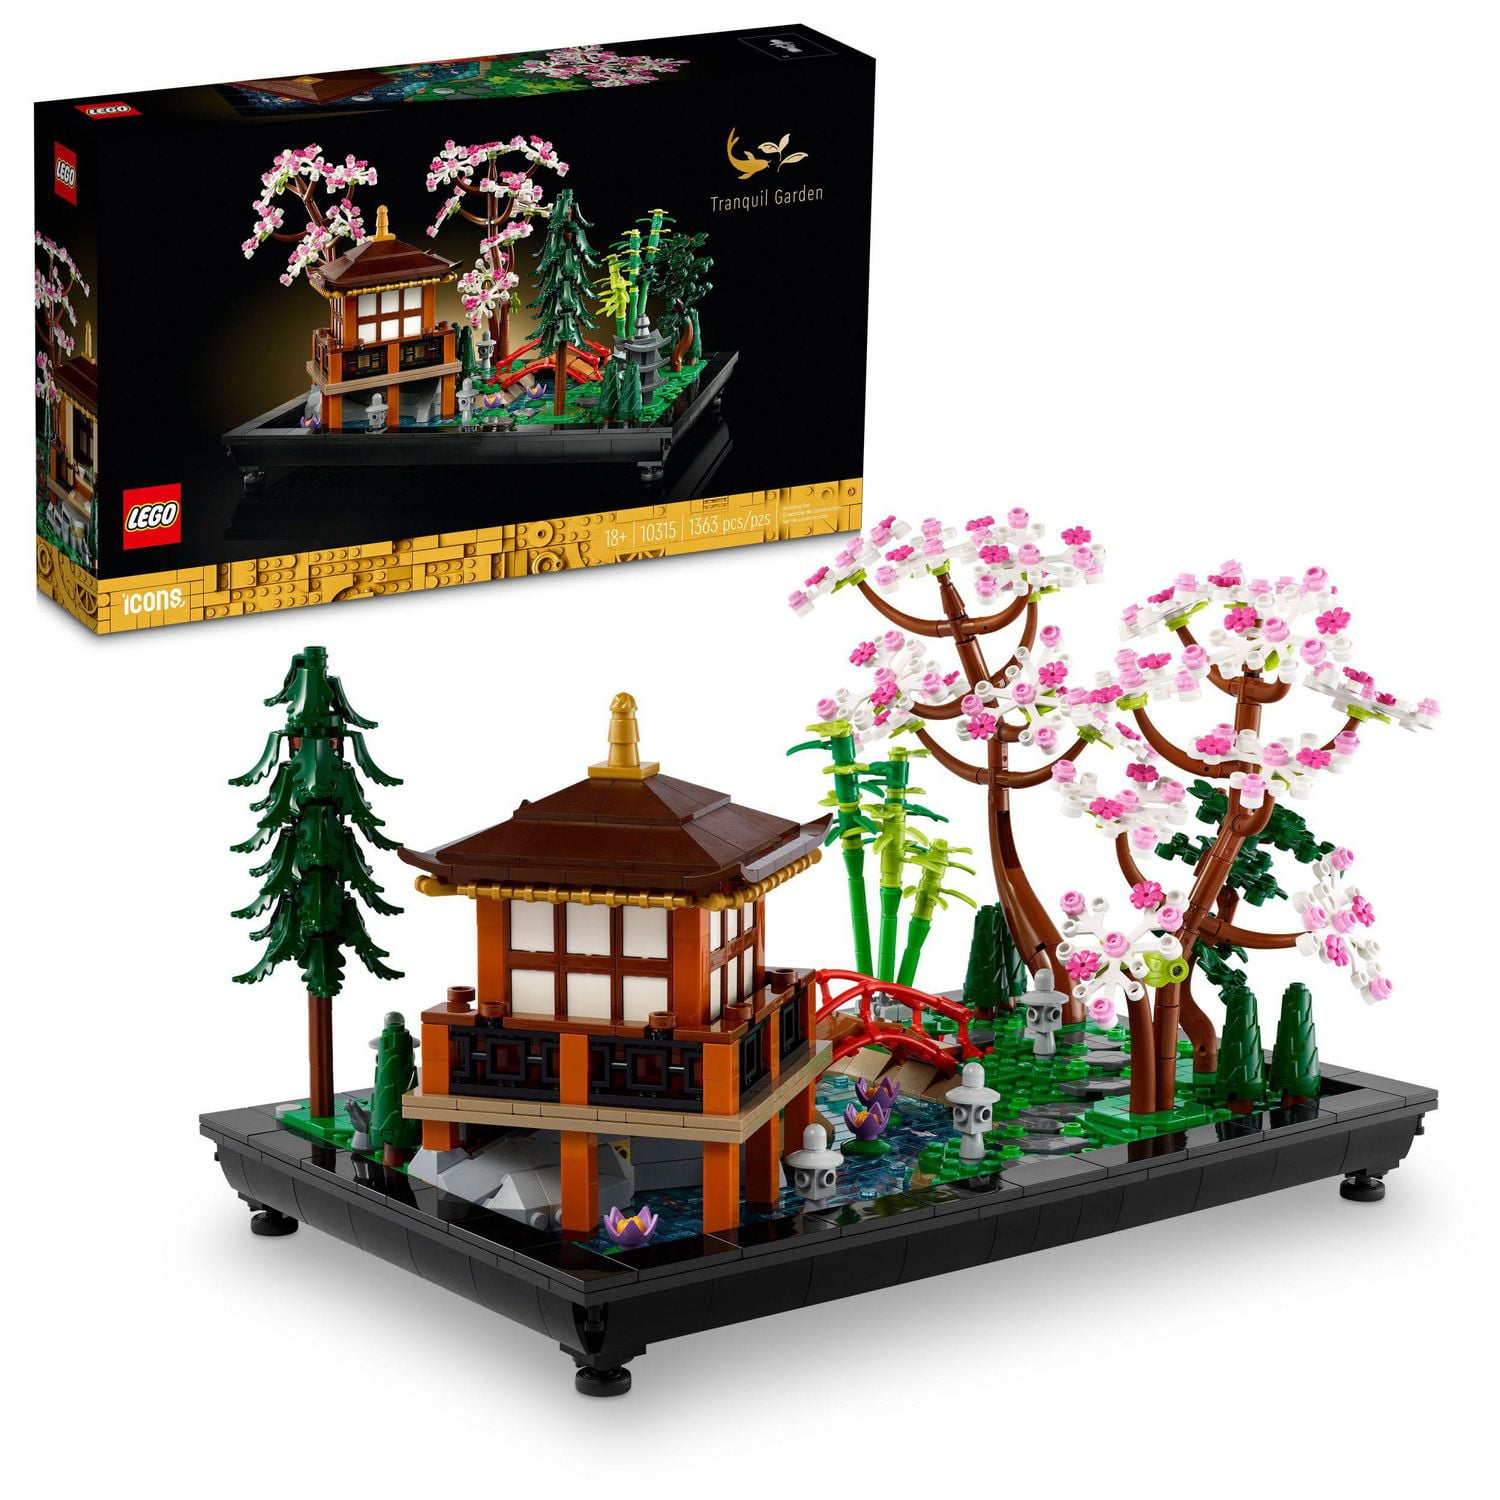 LEGO Icons Tranquil Garden Creative Building Set, A Gift Idea for